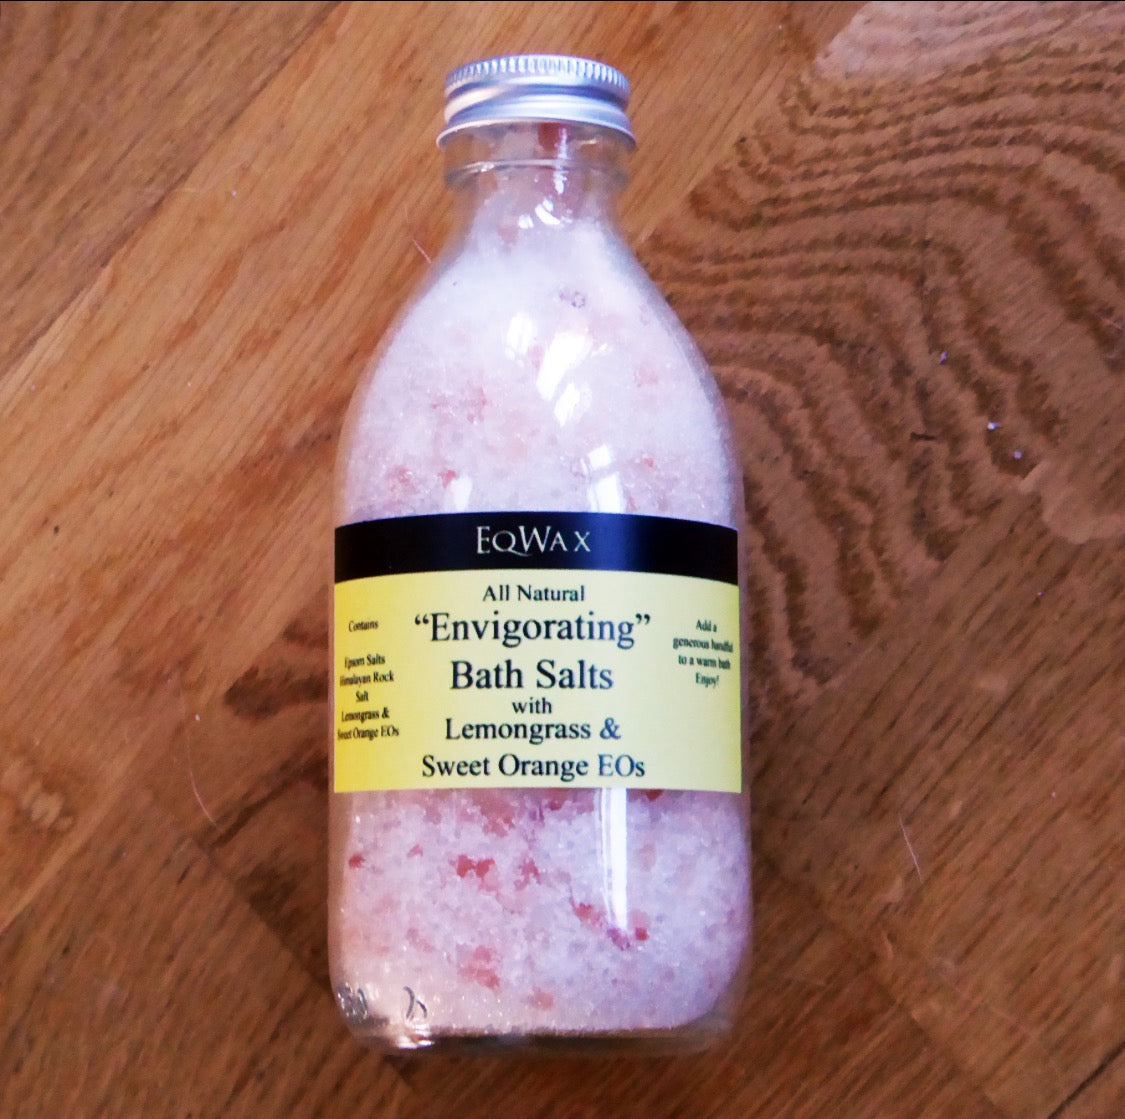 ‘Invigorating’ Bath Salts